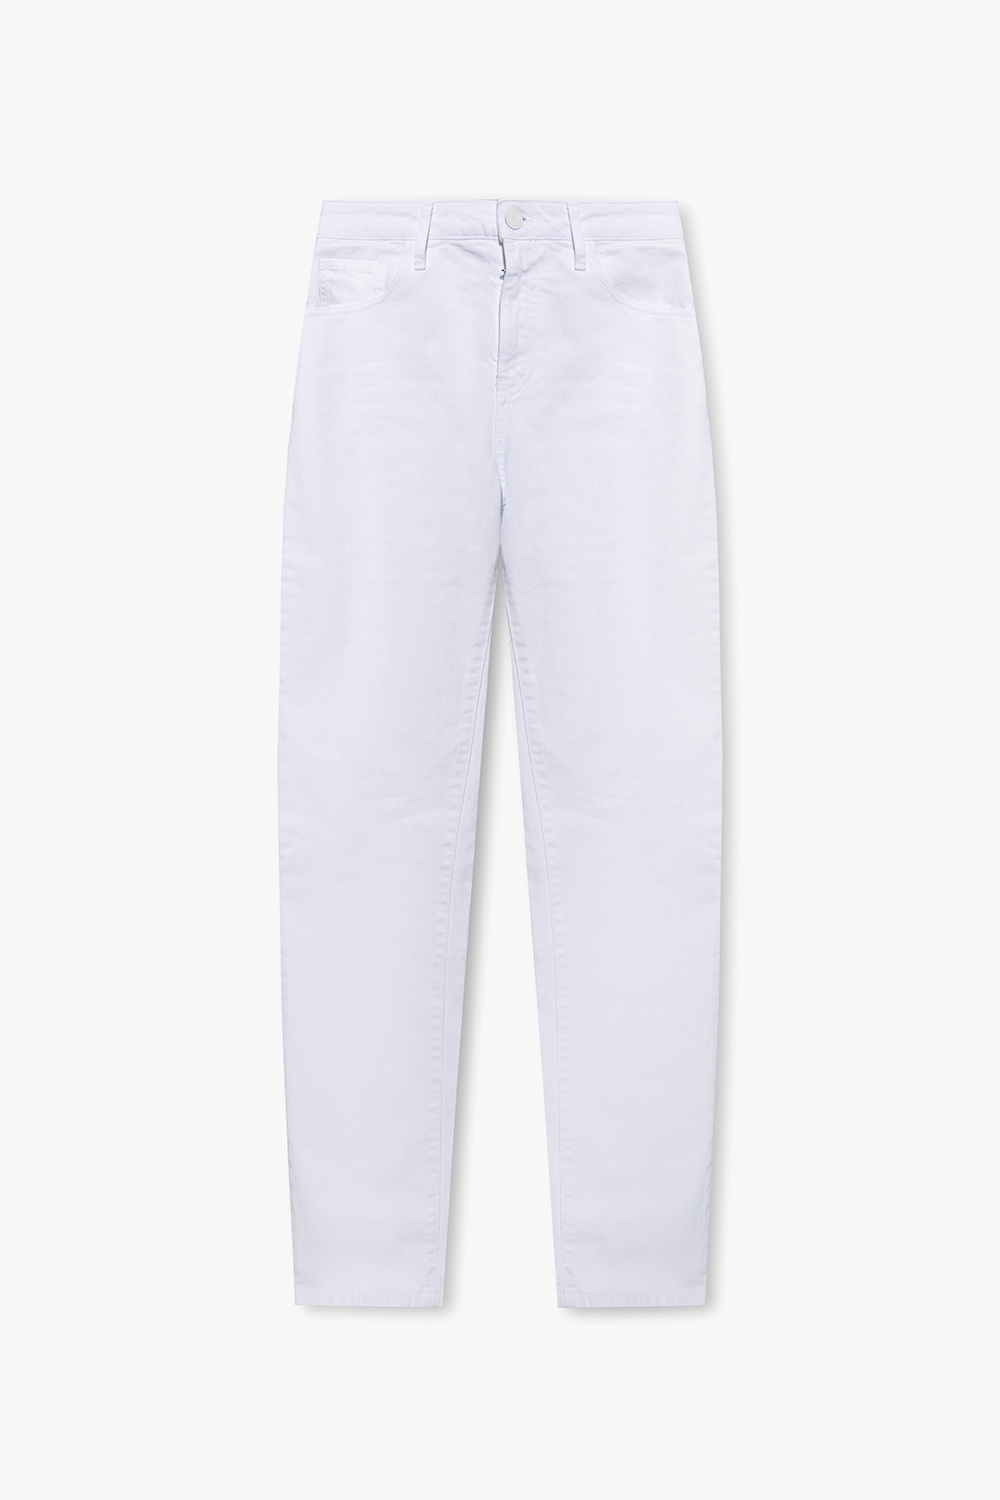 IetpShops Eritrea - FARM Rio Florant Print Shorts - fit jeans Raf Simons -  White Slim